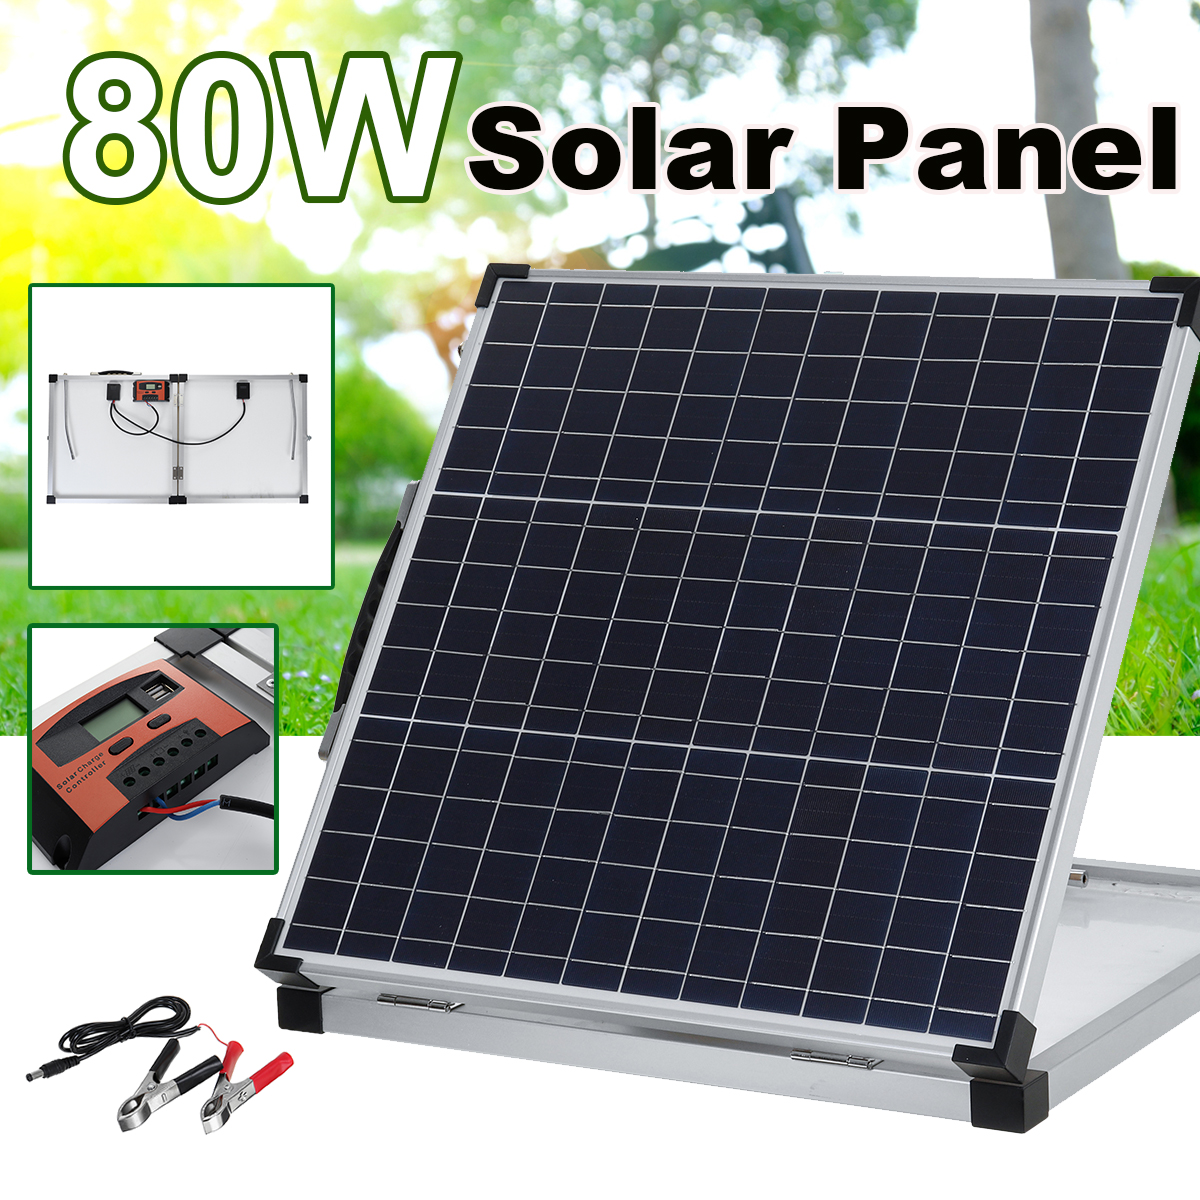 80W-Solar-Panel-Monocrystalline-Silicon-Cell-With-Solar-Controller-1661359-2